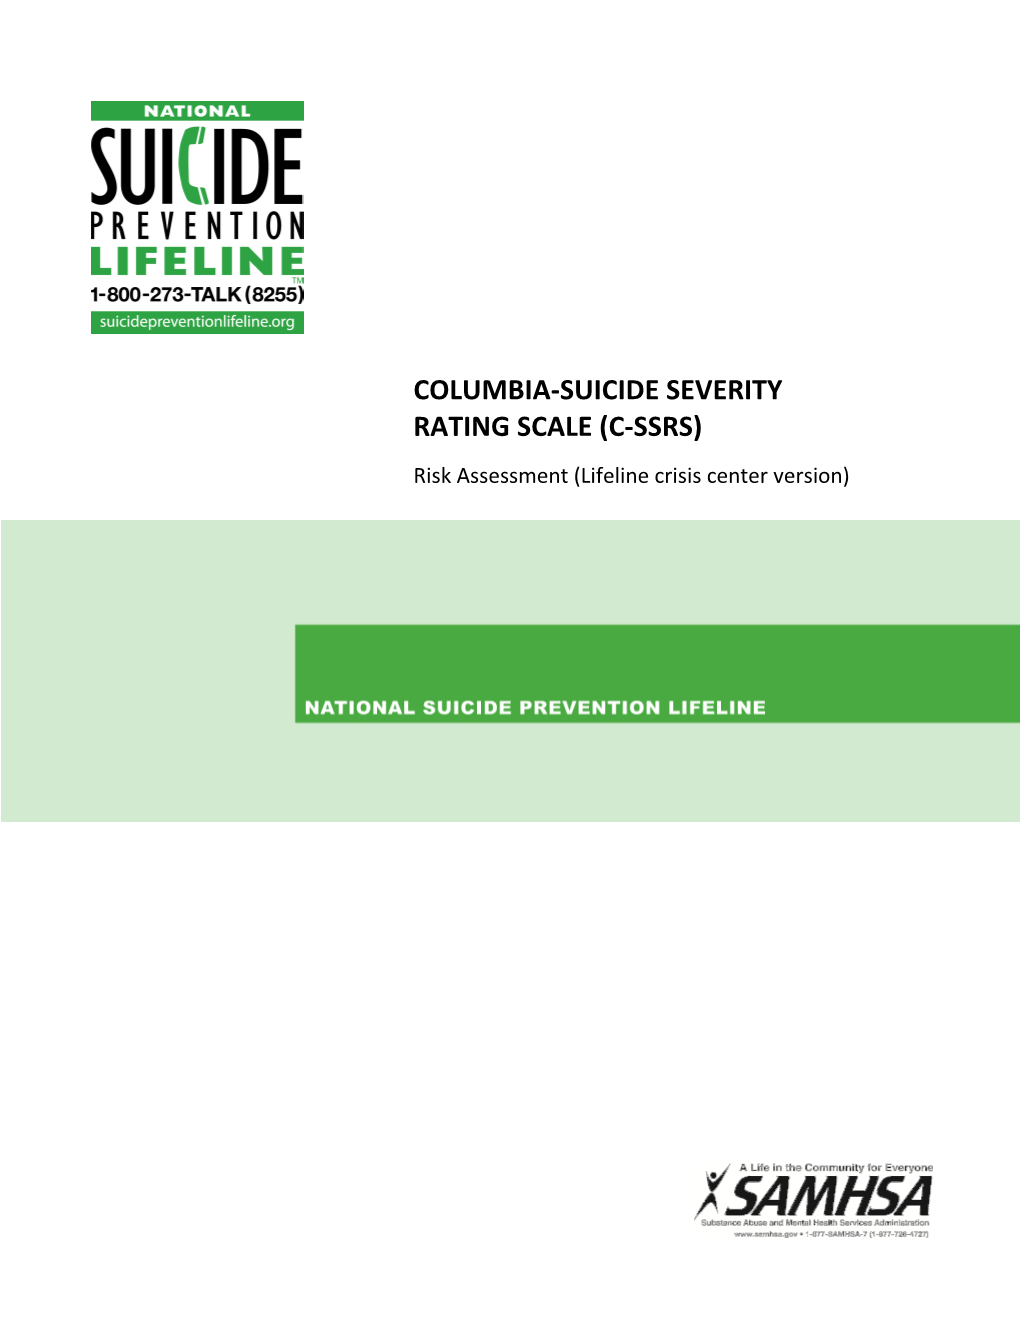 COLUMBIA-SUICIDE SEVERITY RATING SCALE (C-SSRS) Risk Assessment (Lifeline Crisis Center Version)